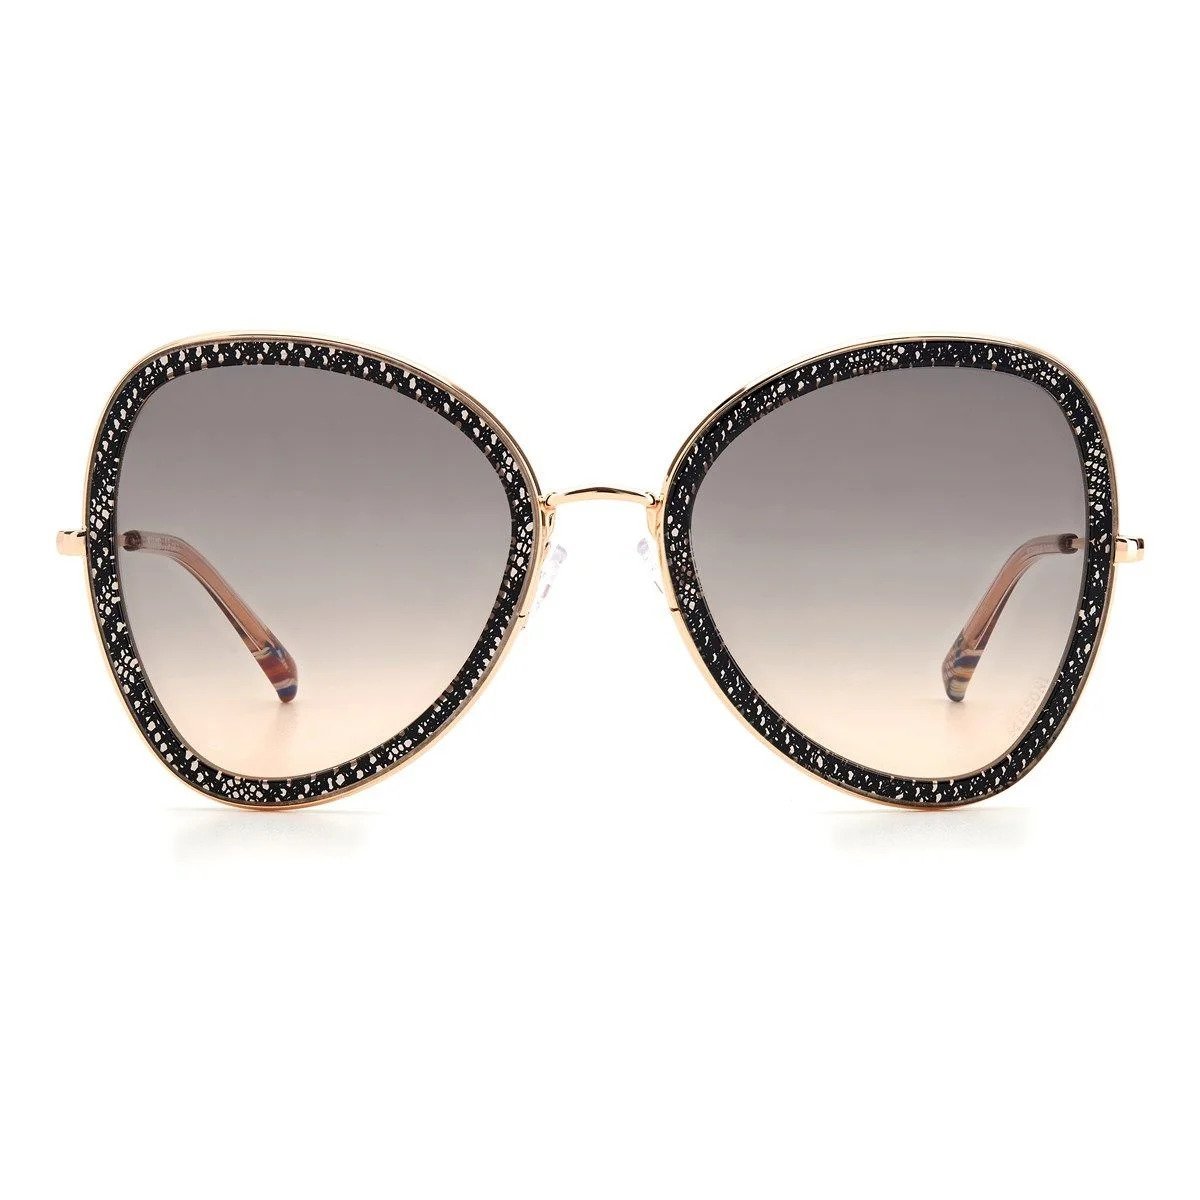 Cat-eye sunglasses for women by Missoni